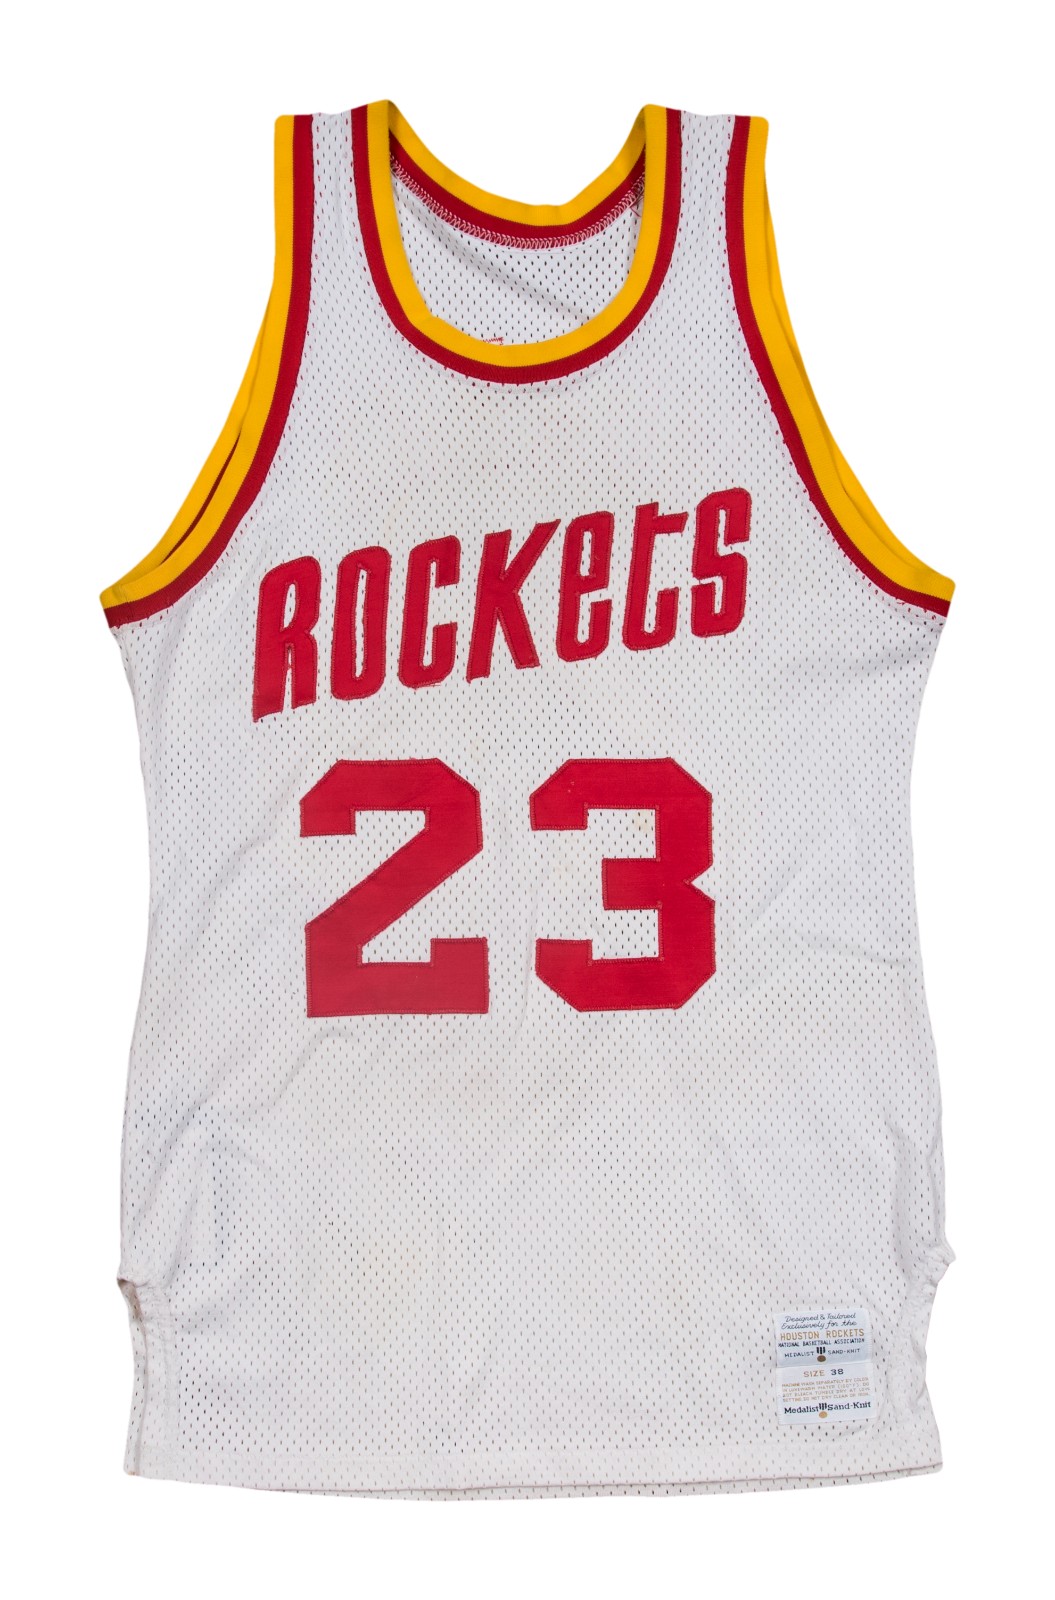 Houston Rockets 197677 Trikots